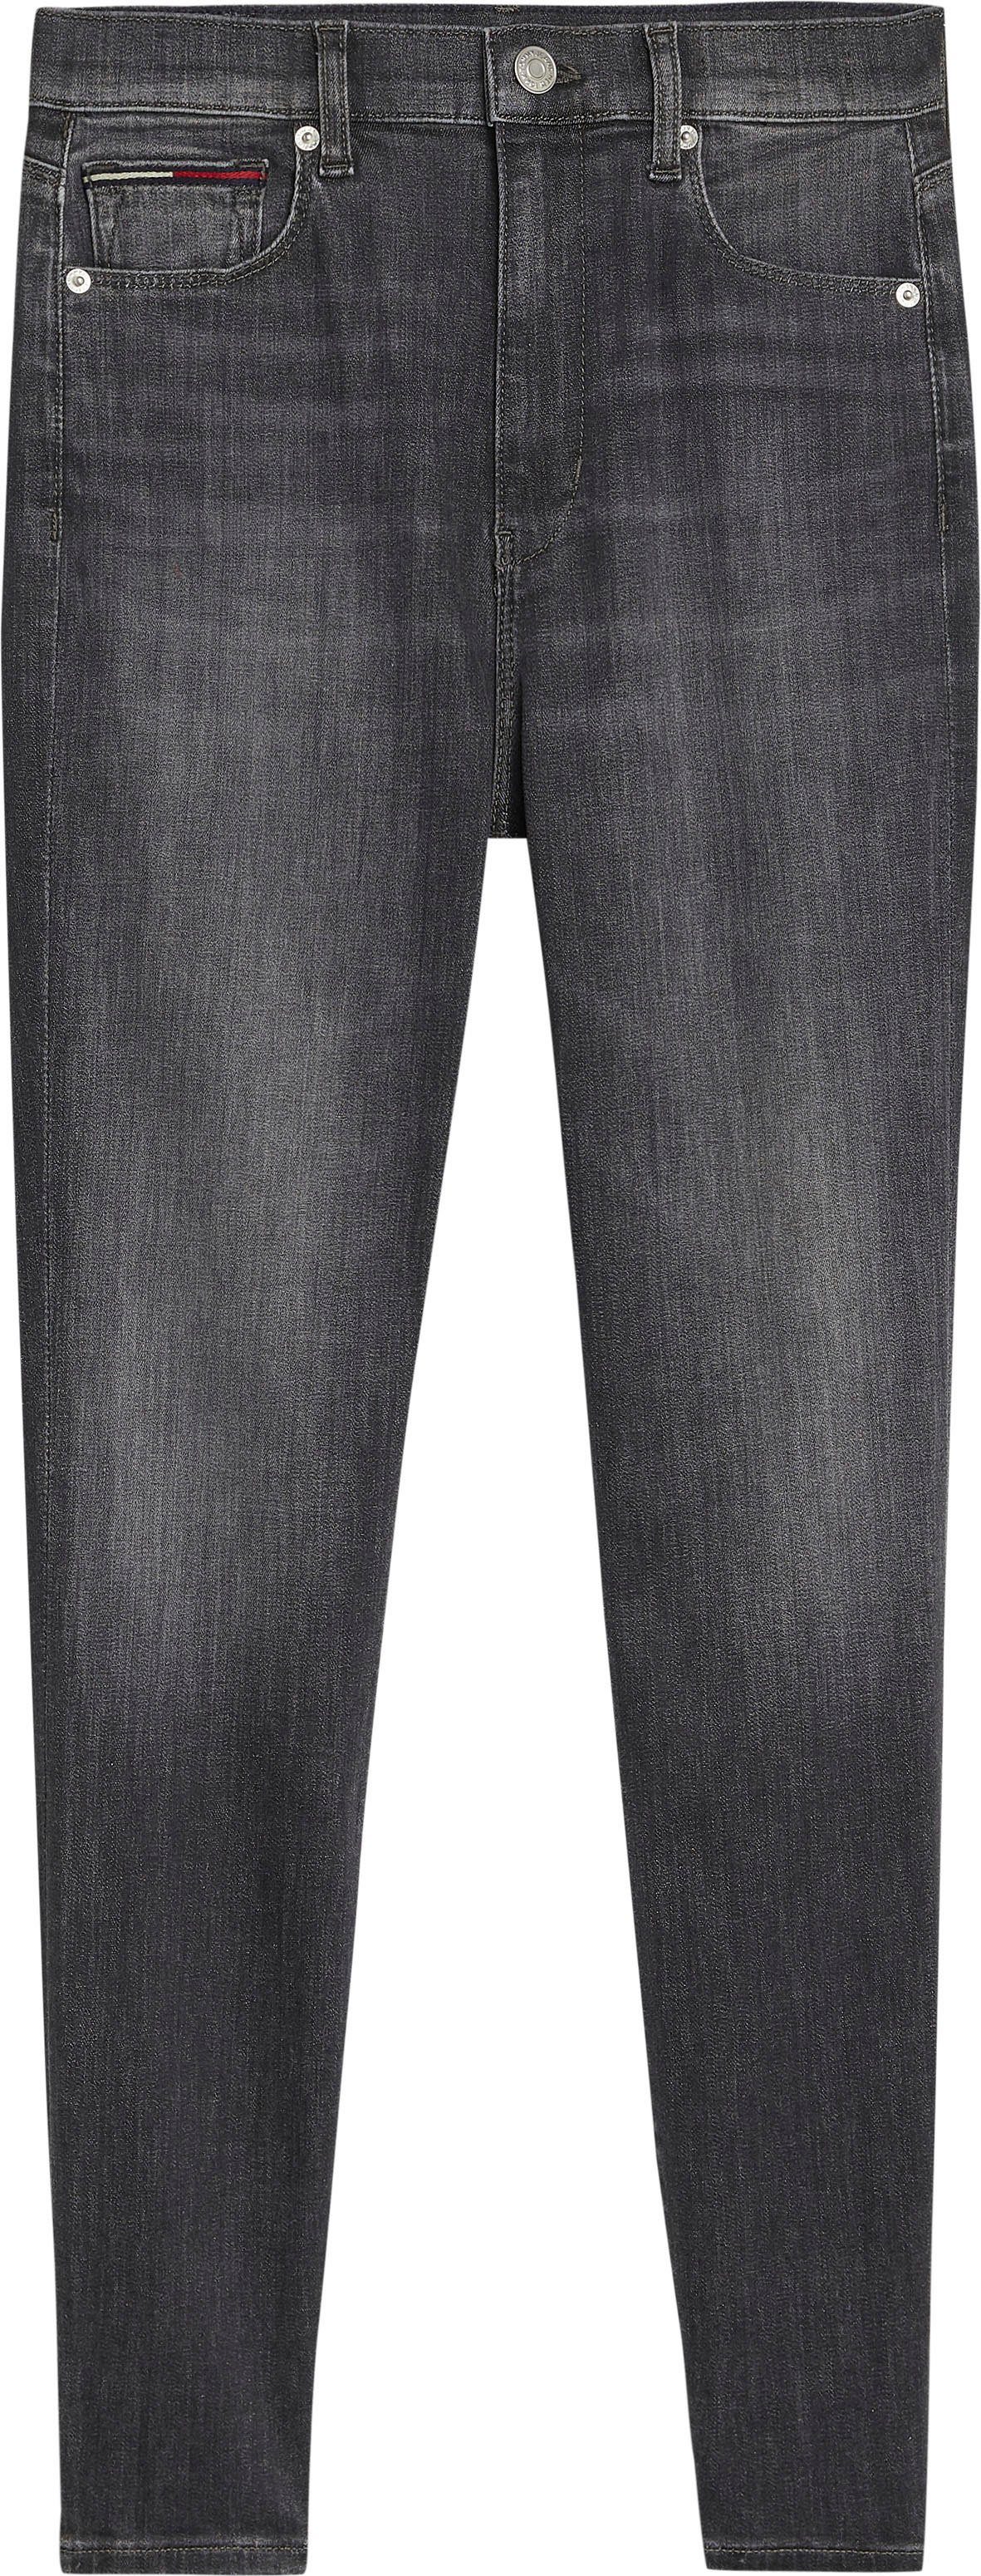 Tommy Jeans Skinny-Jeans online kaufen | OTTO